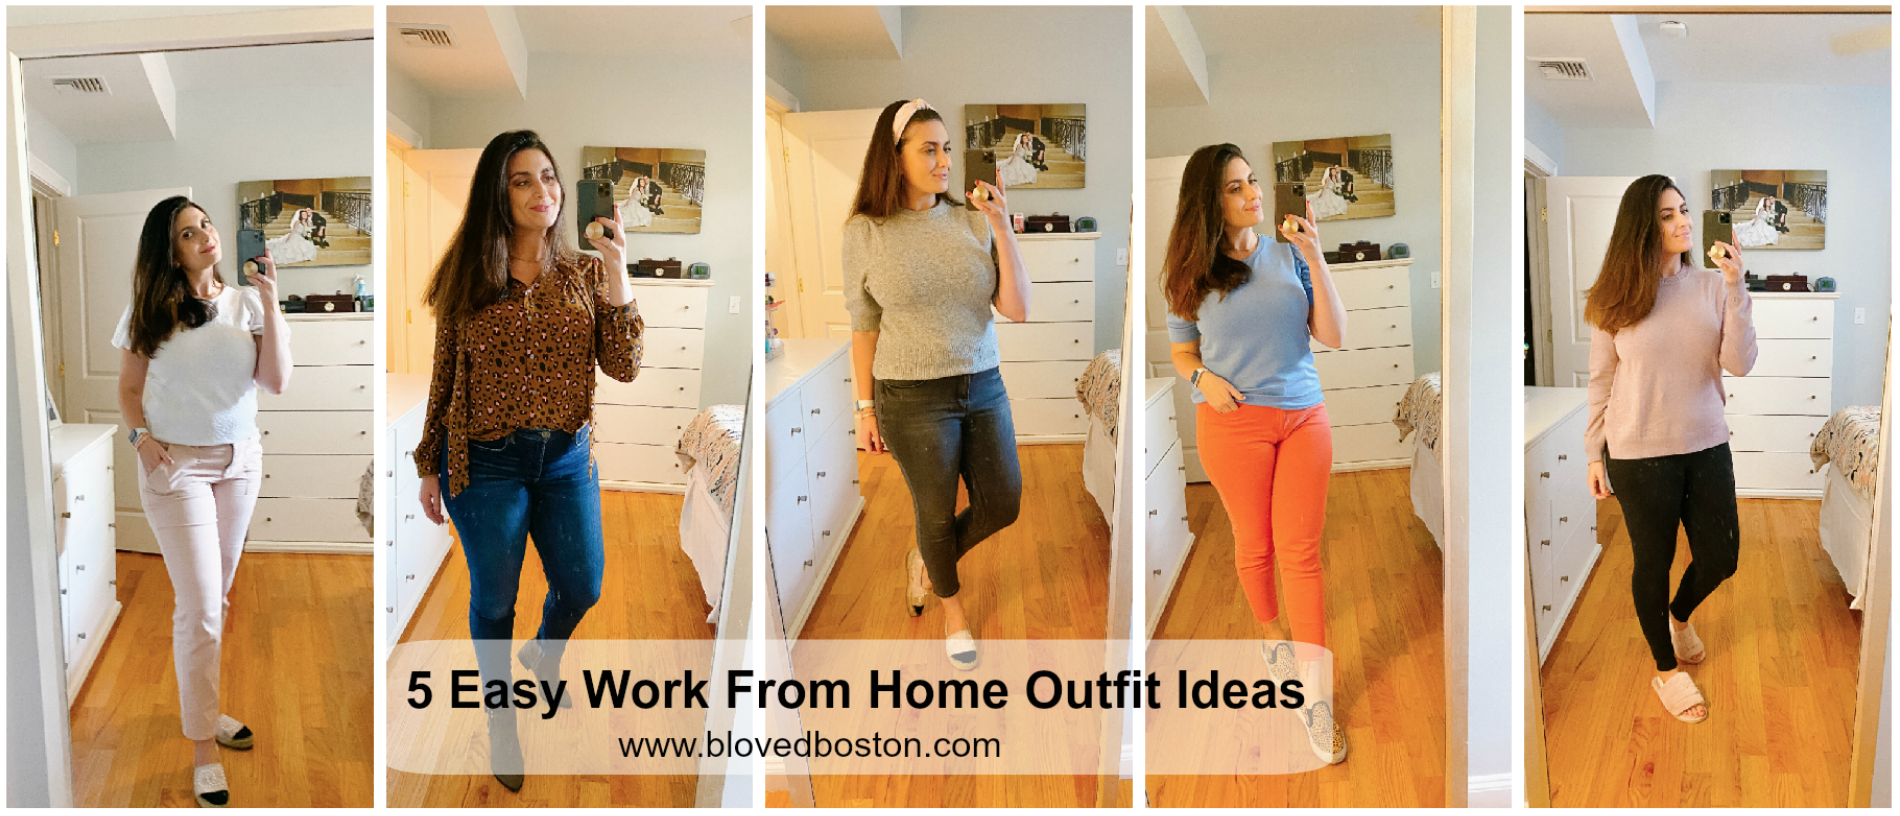 Outfit Inspiration: Sweater Dress & Leggings - B Loved Boston